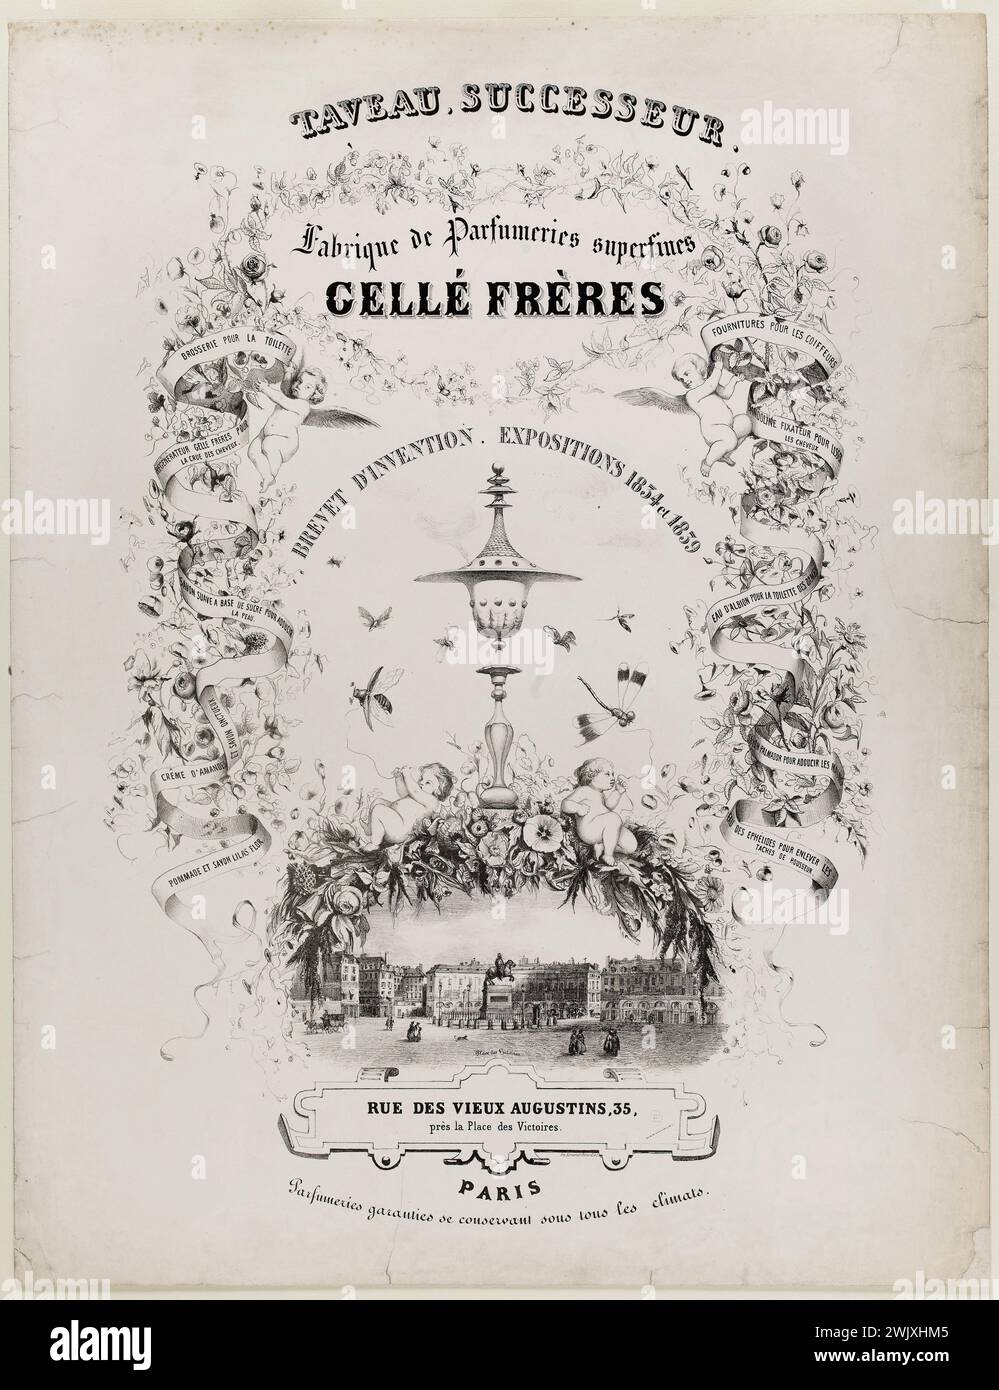 Frères gelled. 'Successor taveau, factory of superfine perfumeries'. Lithography. 1840-1860. Paris, Carnavalet museum. 58877-8 Invention patent, exhibition, lithography, successor taveau Stock Photo